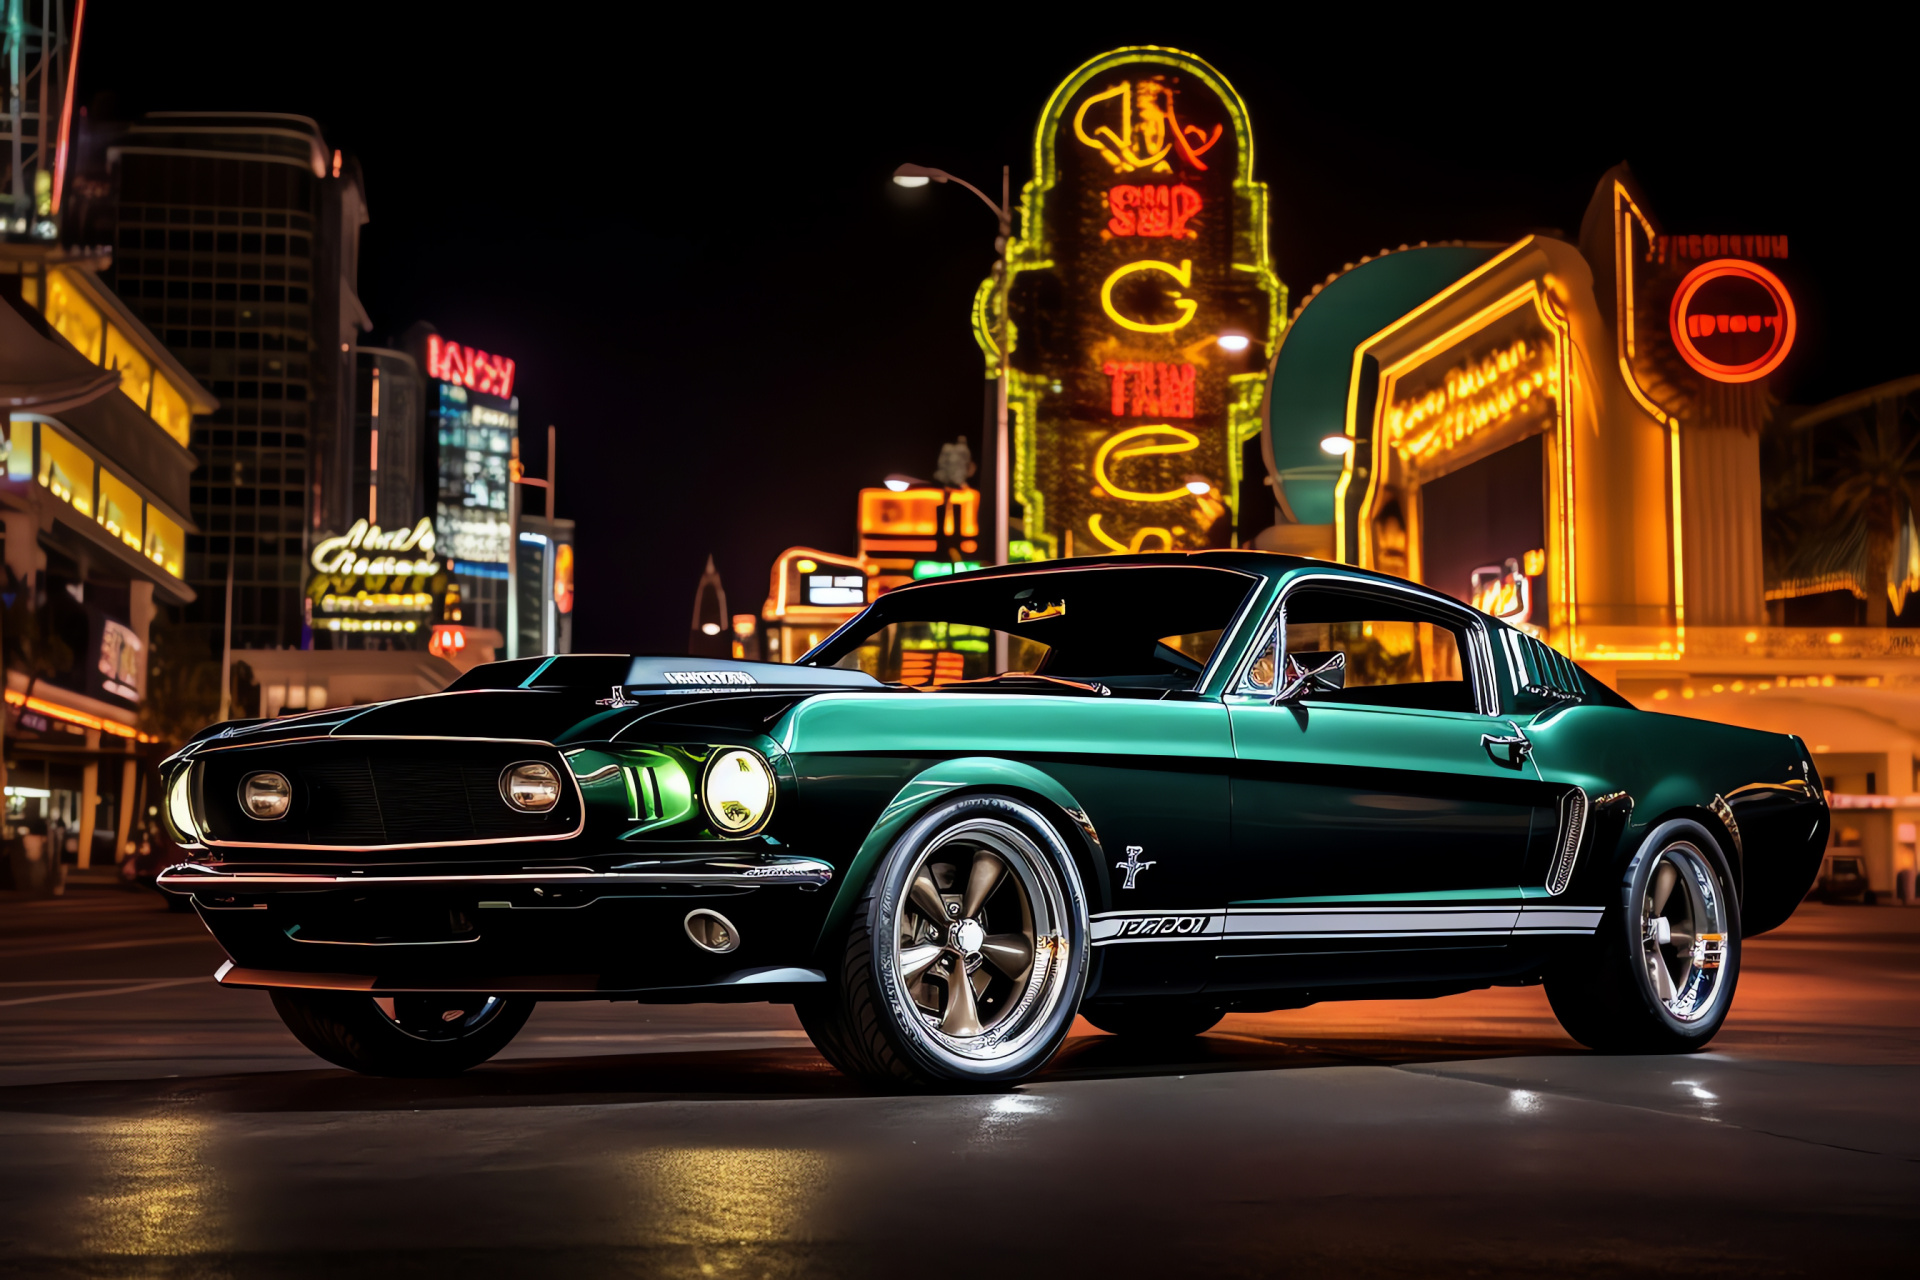 Mustang in Vegas, Bullitt special edition, Iconic signage, Neon-lined Strip, Mustang grandeur, HD Desktop Image